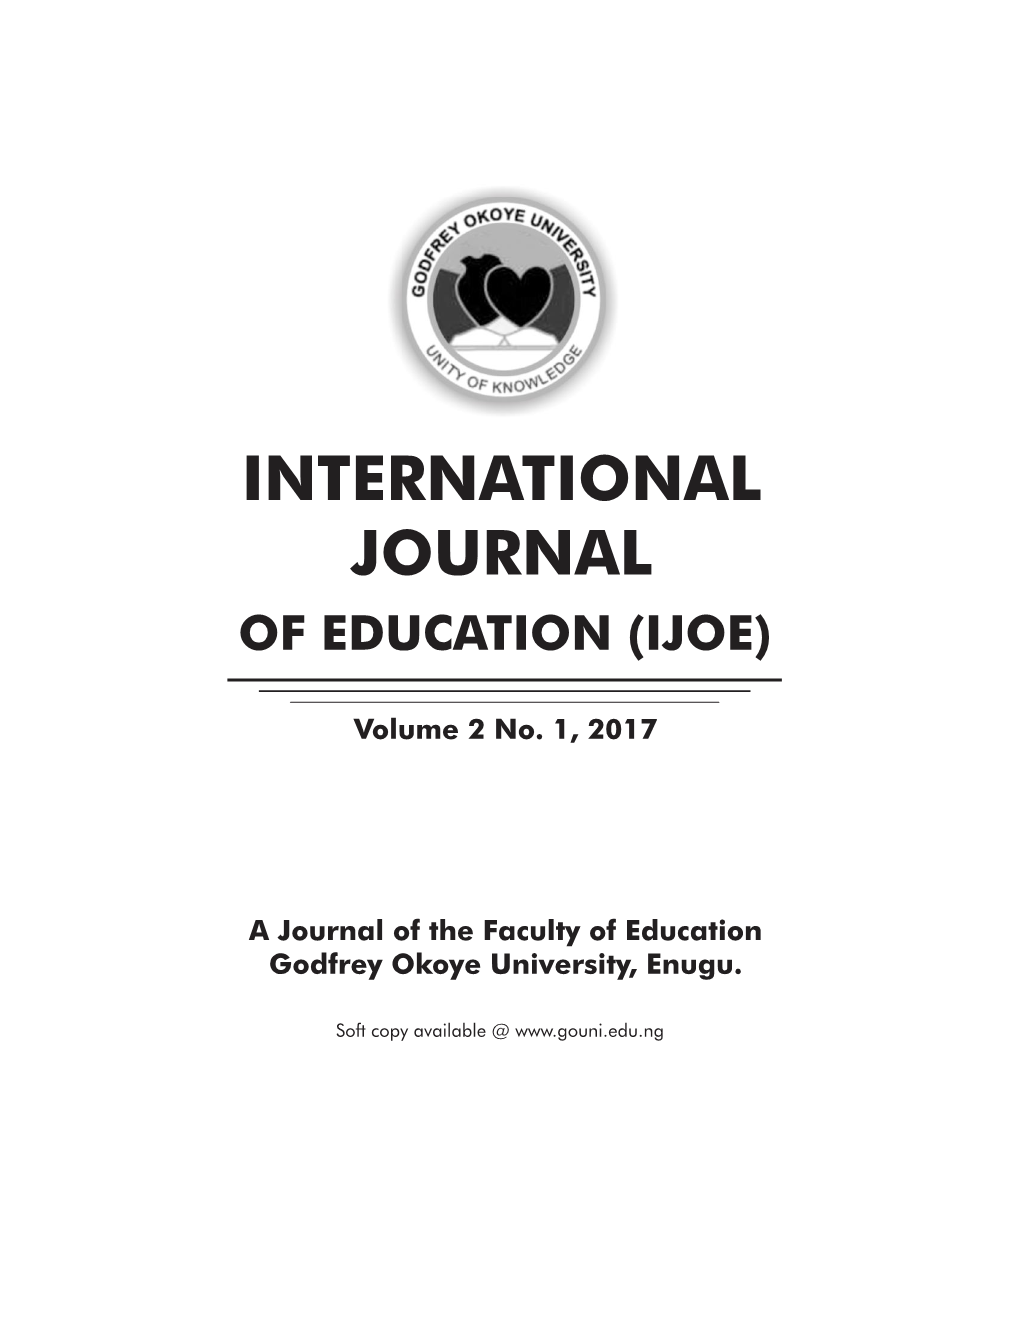 INTERNATIONAL JOURNAL of EDUCATION (IJOE) Volume 2 No1, 2017